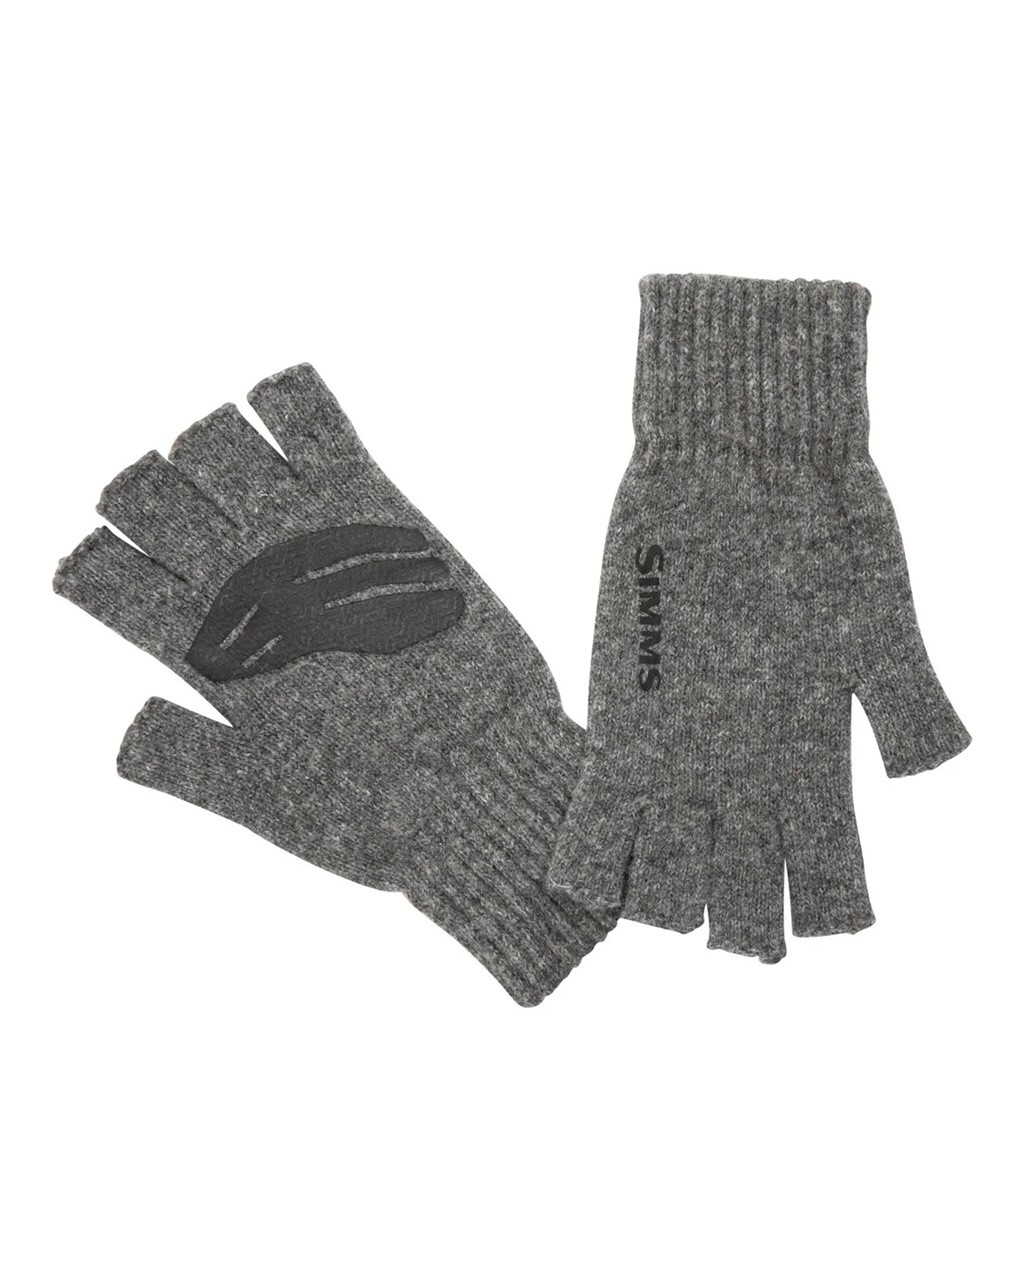 Simms Wool Half Finger Glove - S/M